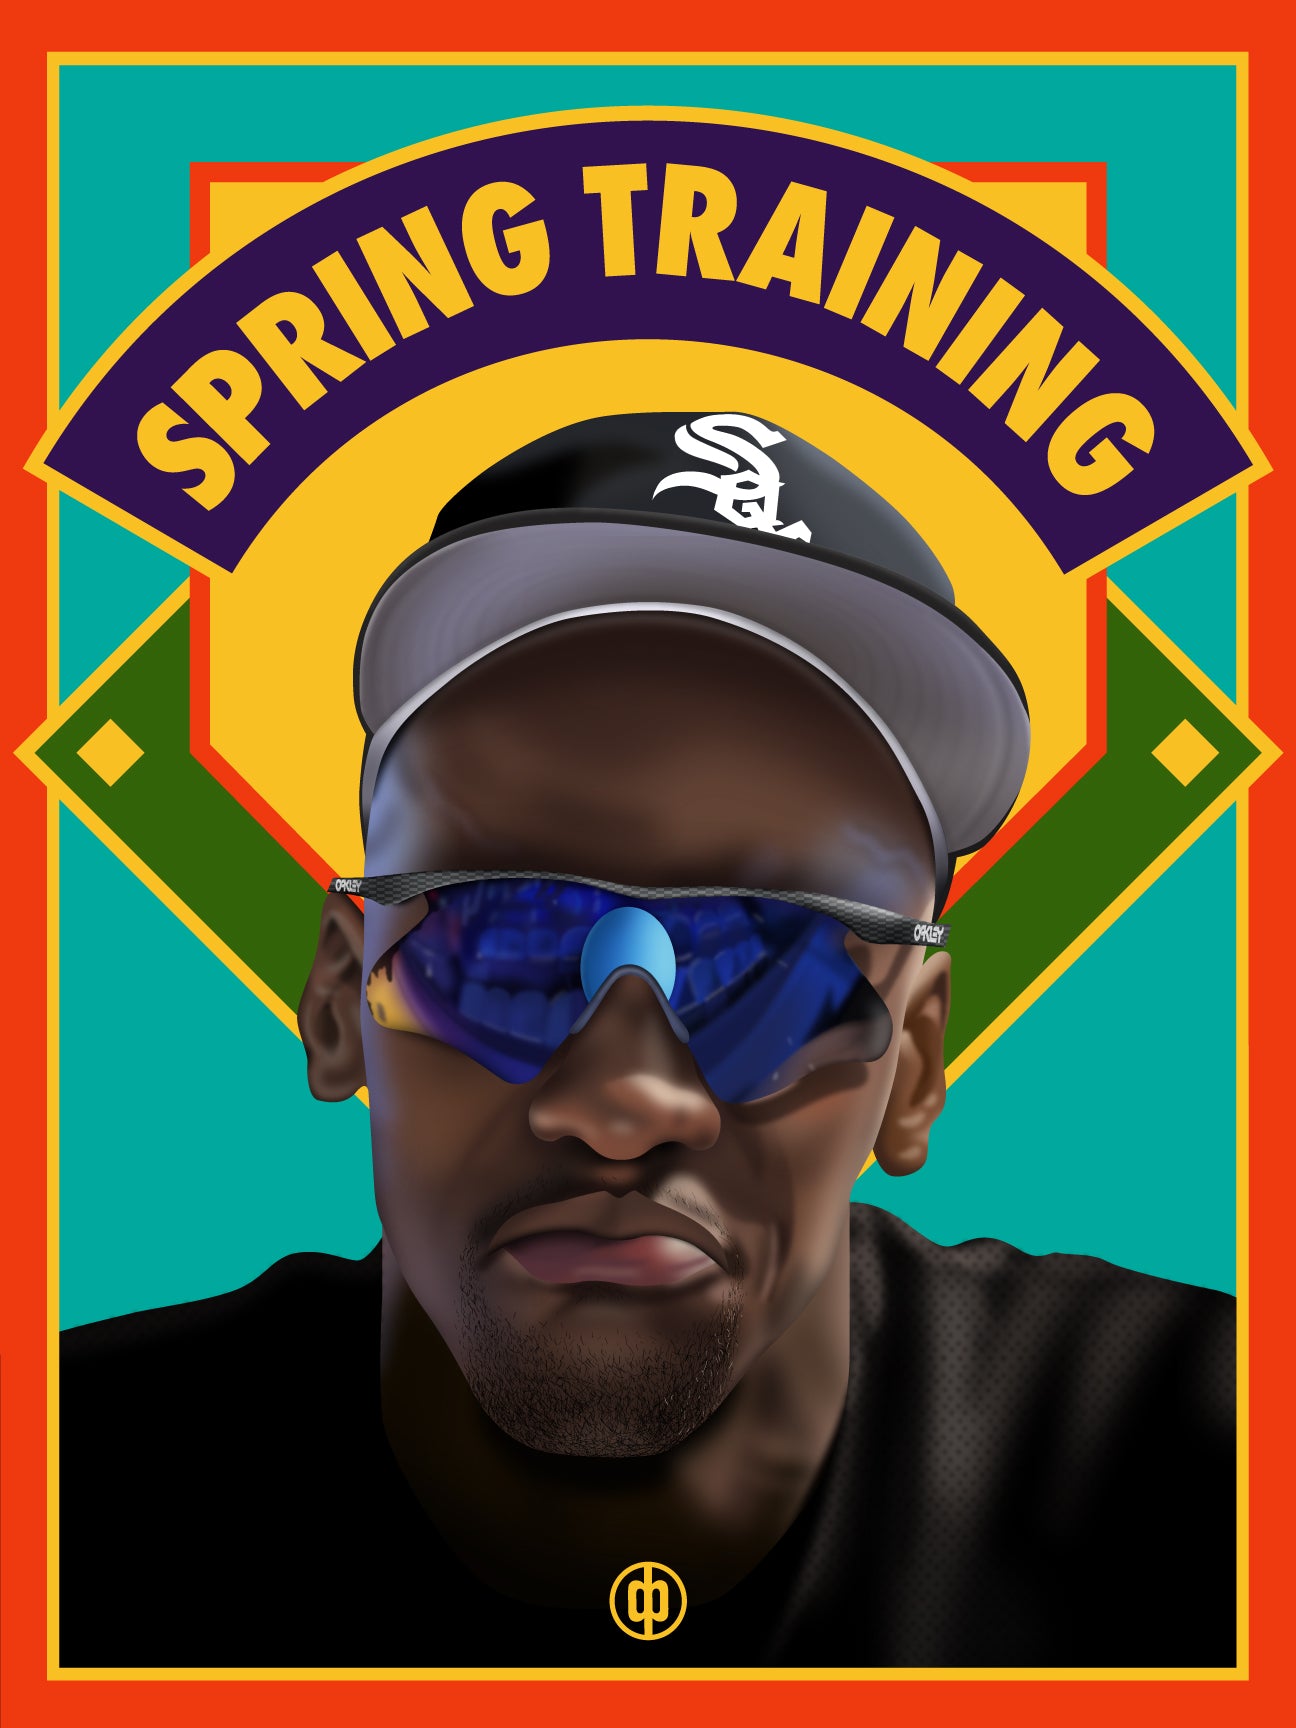 White Sox practice at spring training – Orlando Sentinel